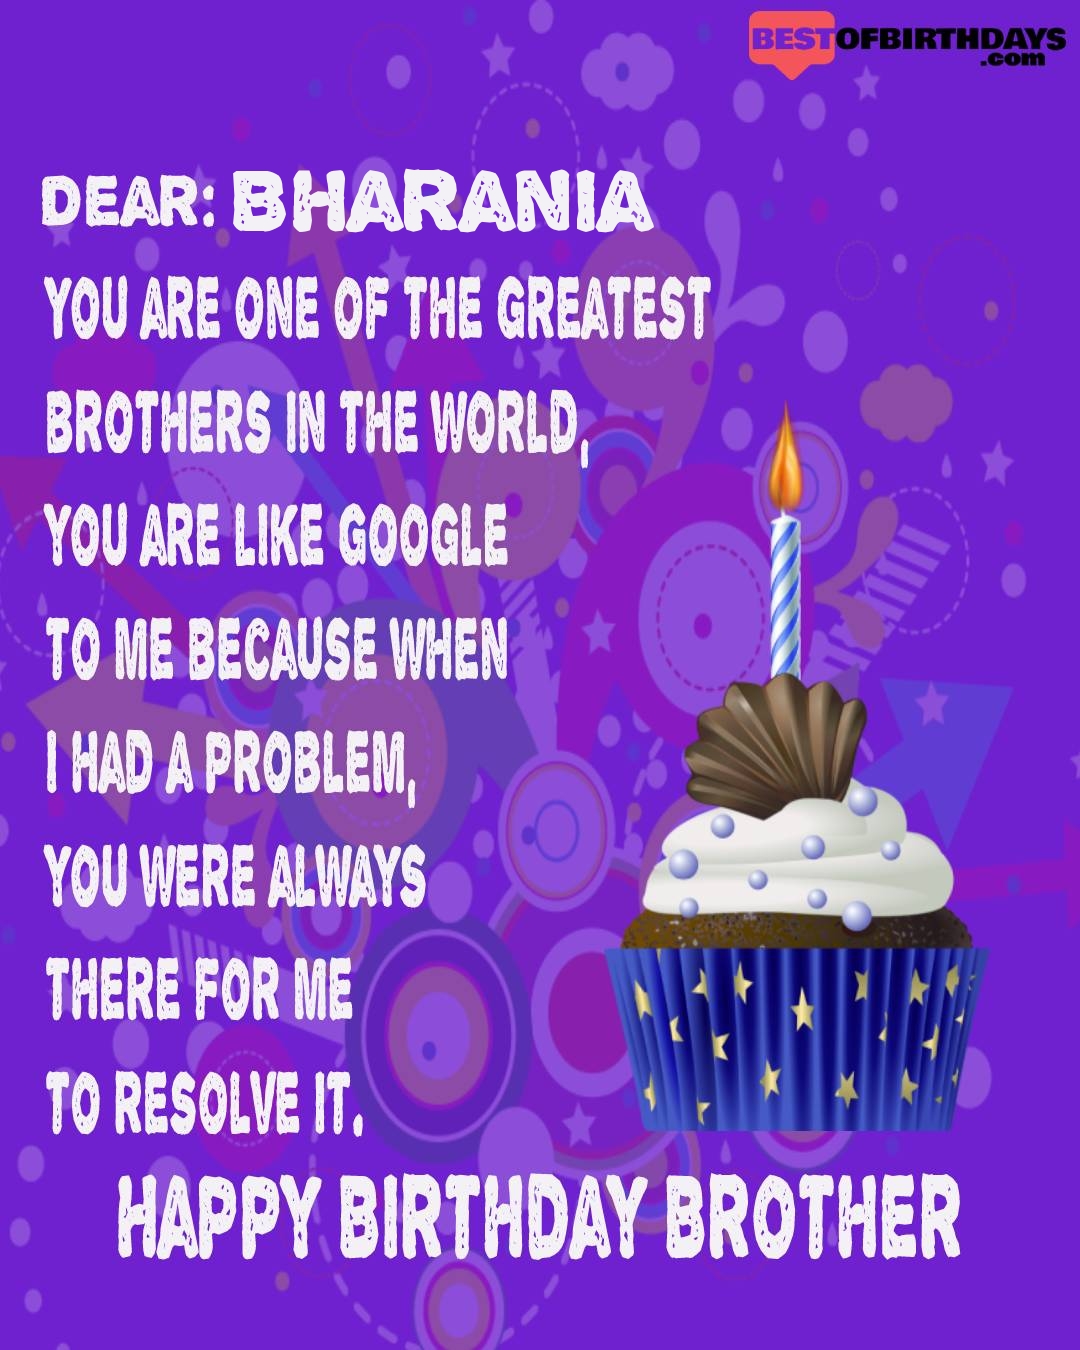 Happy birthday bharania bhai brother bro